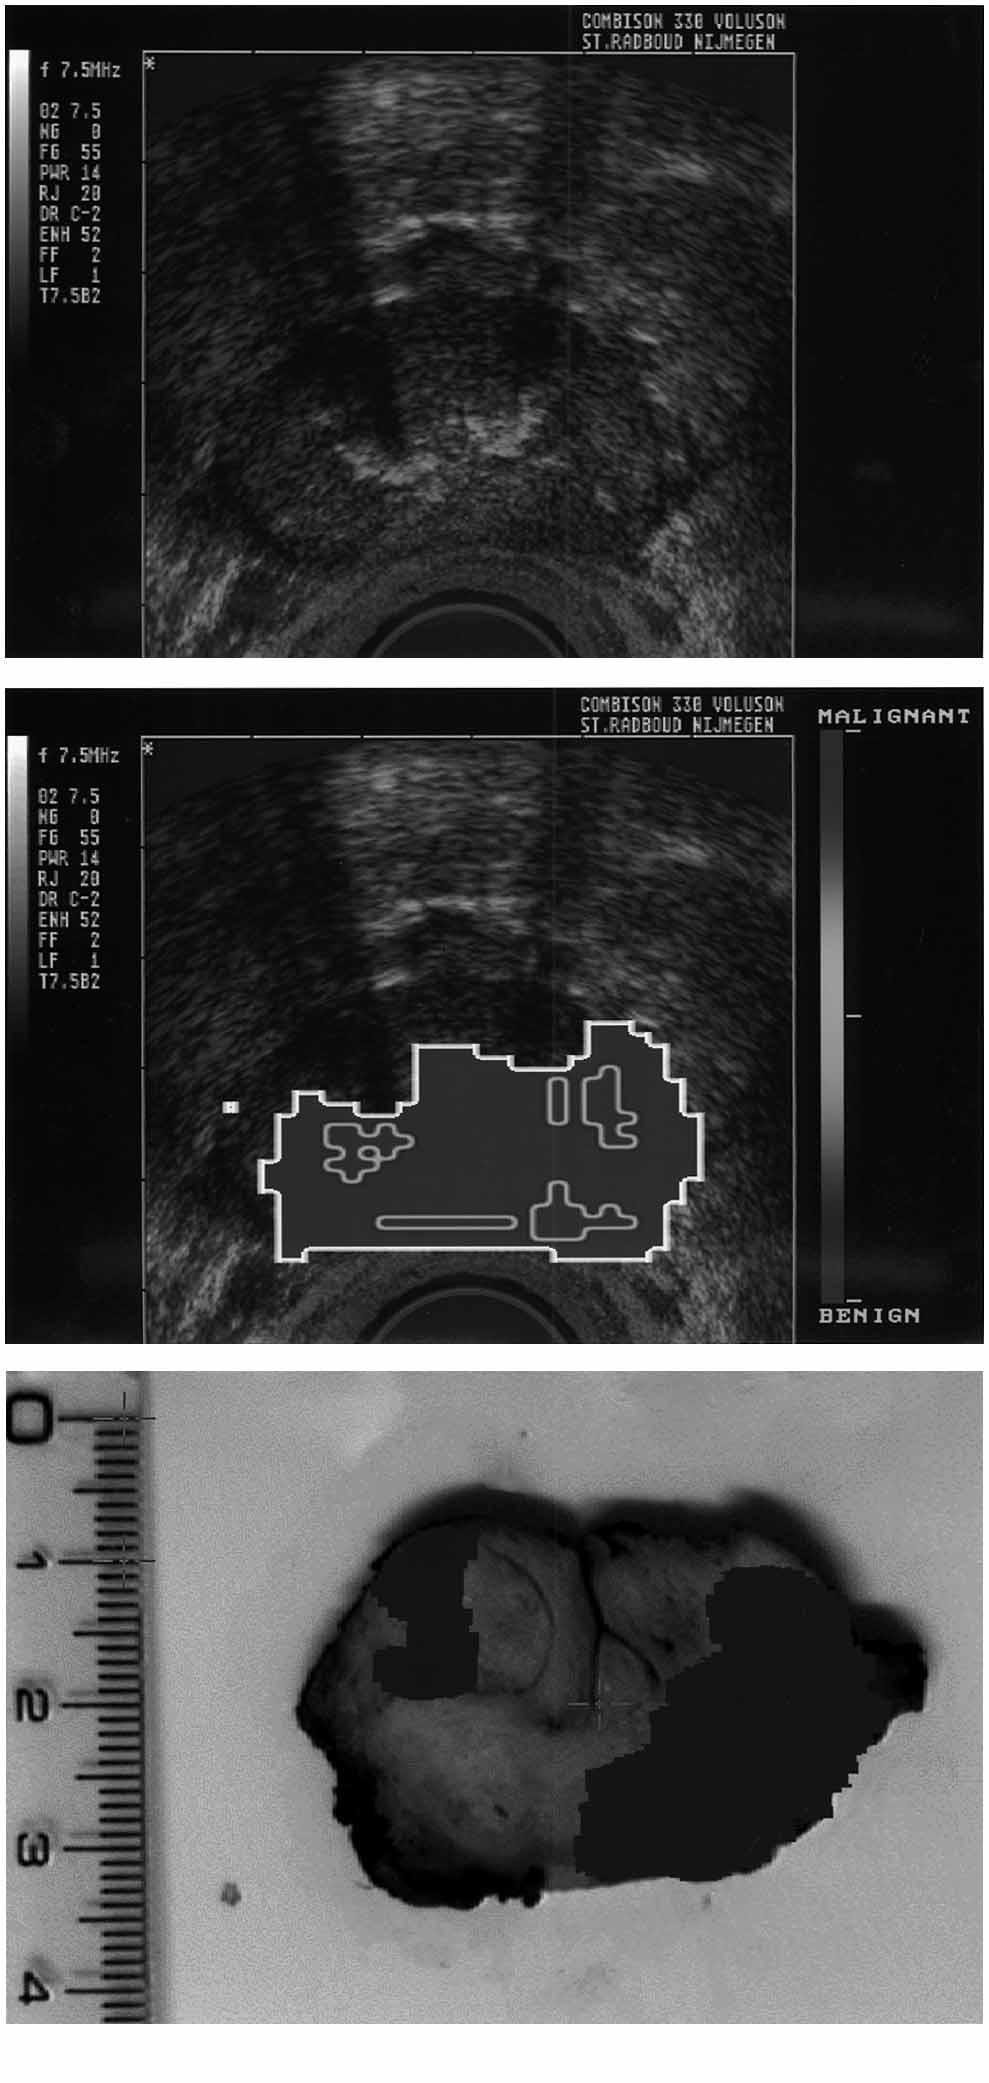 59 Figure 2 (A) Prostate ultrasound image; (B) Corresponding AUDEX analysis (inner marked area suspicious for malignancy); (C) Corresponding pathology (dark area is malignant).